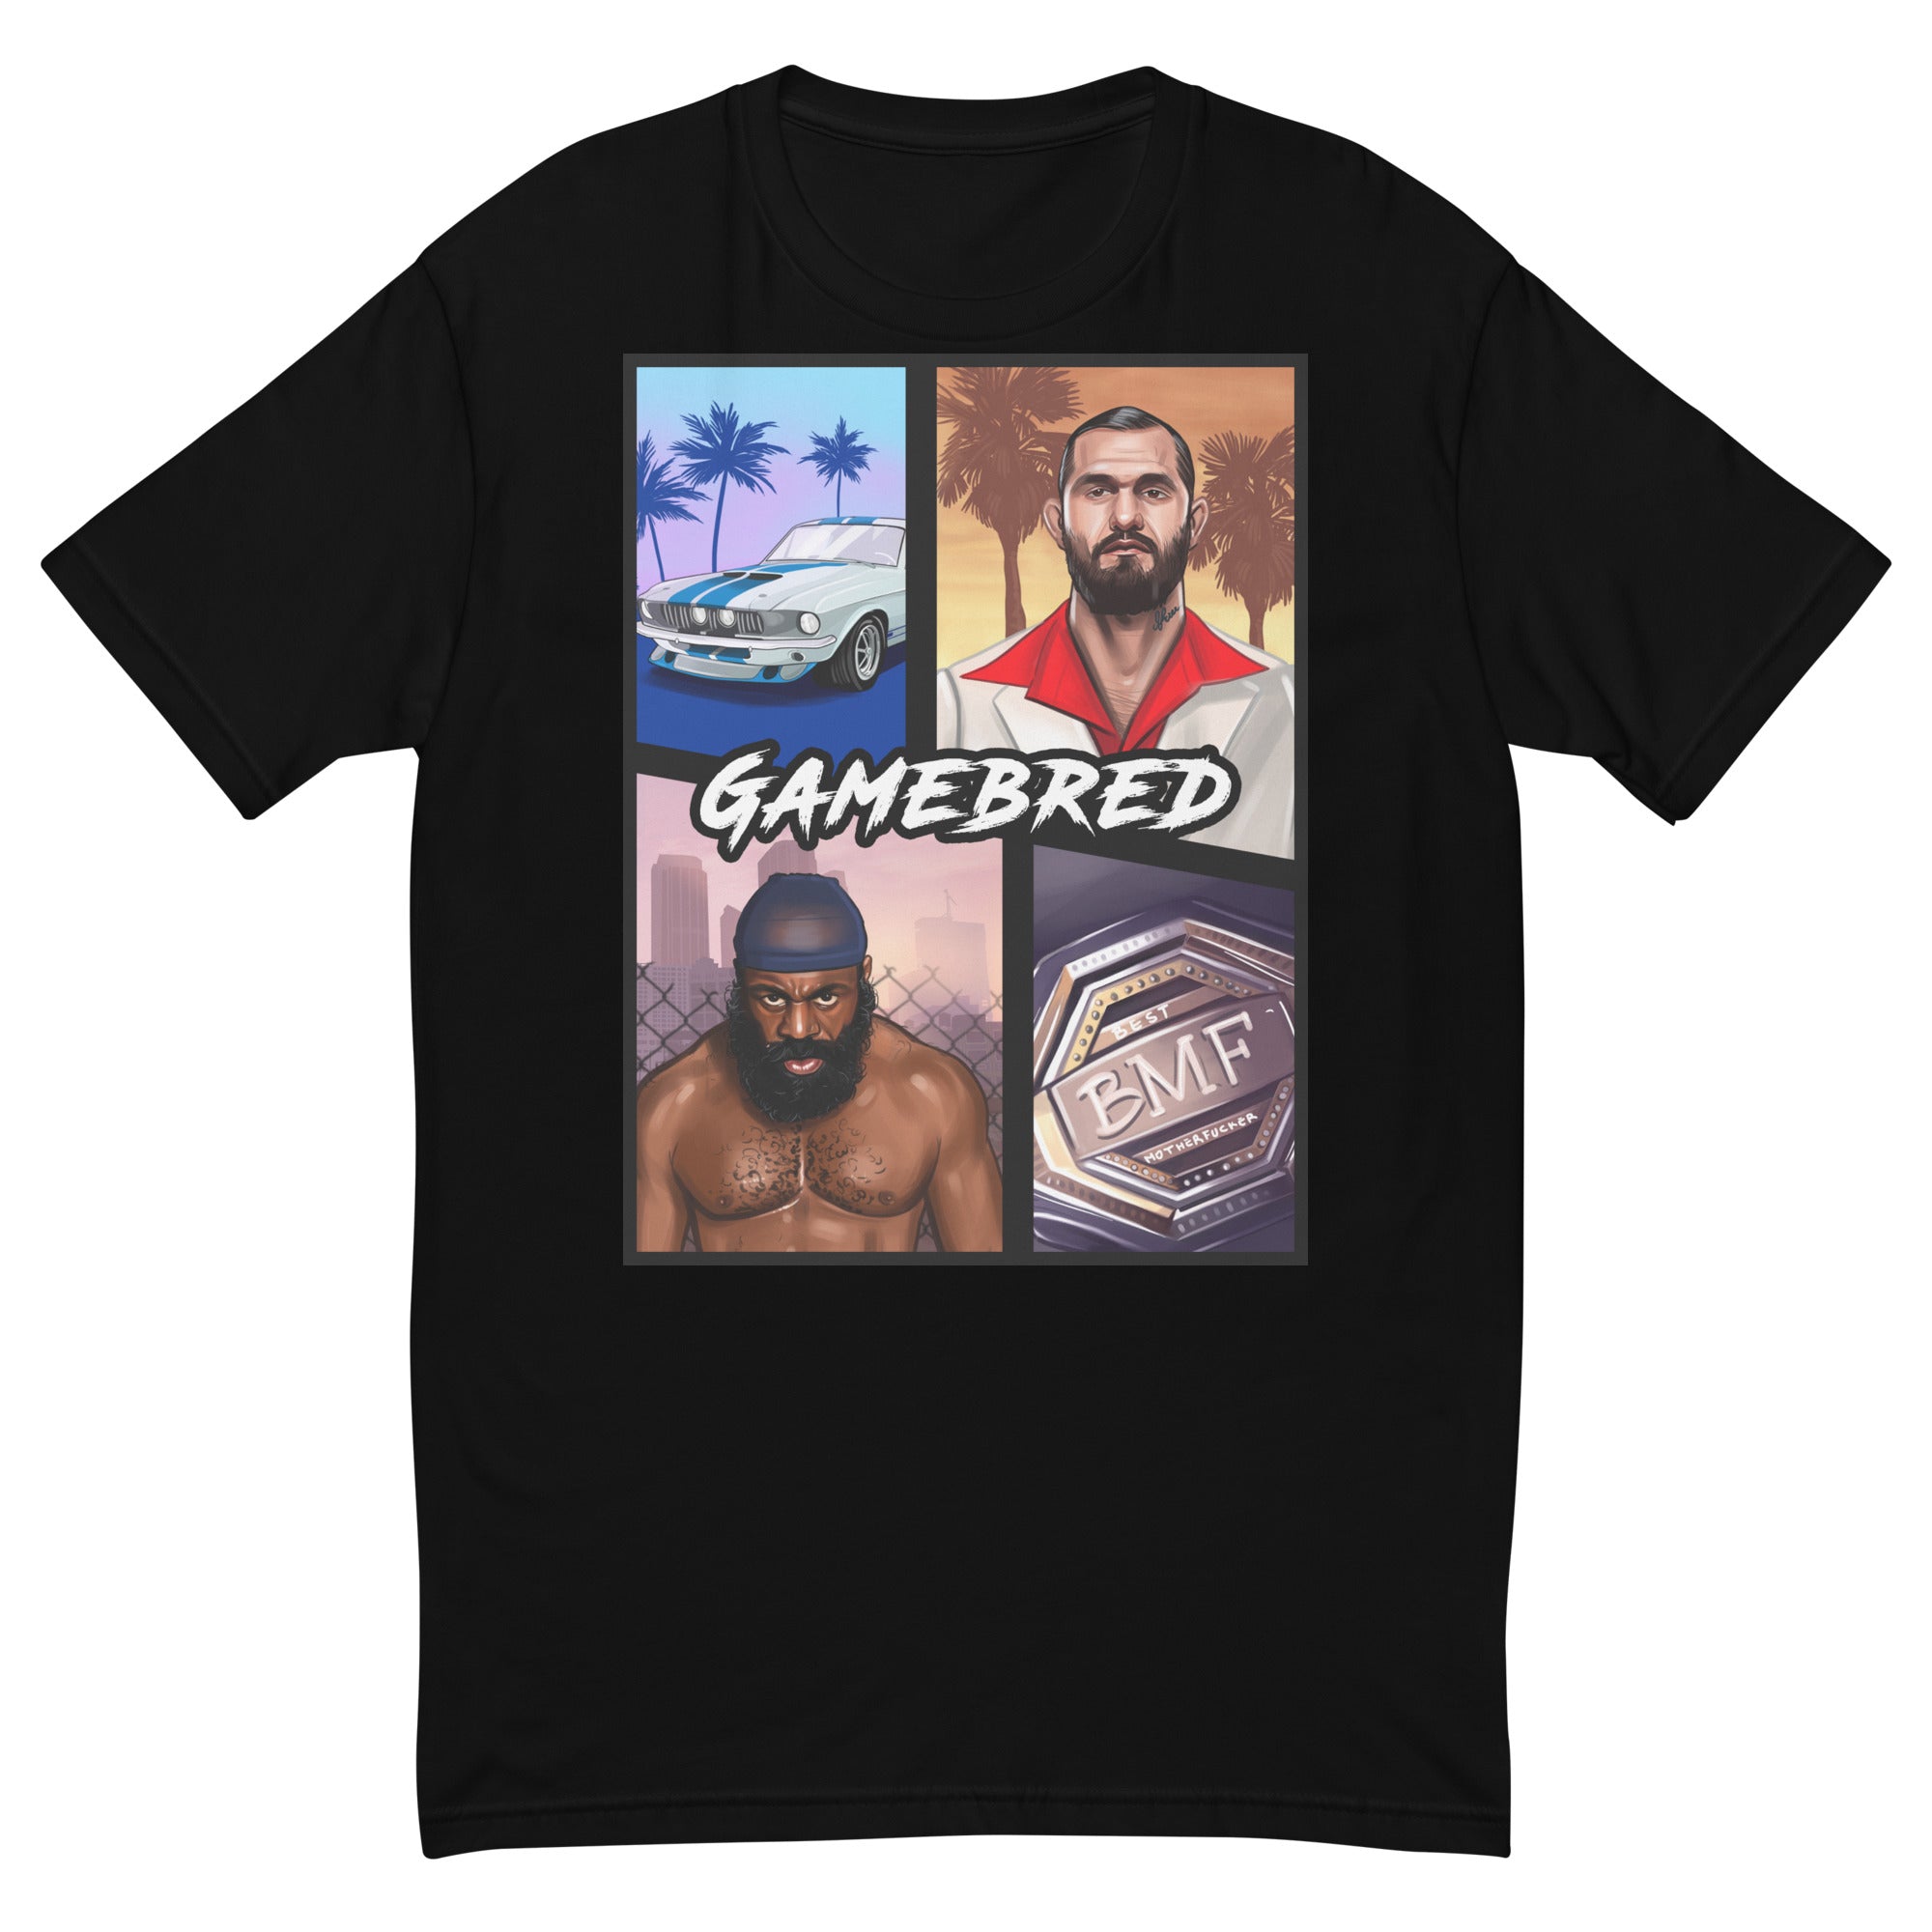 GTA Vice City - Jorge "The Gamebred" Masvidal T - Shirt